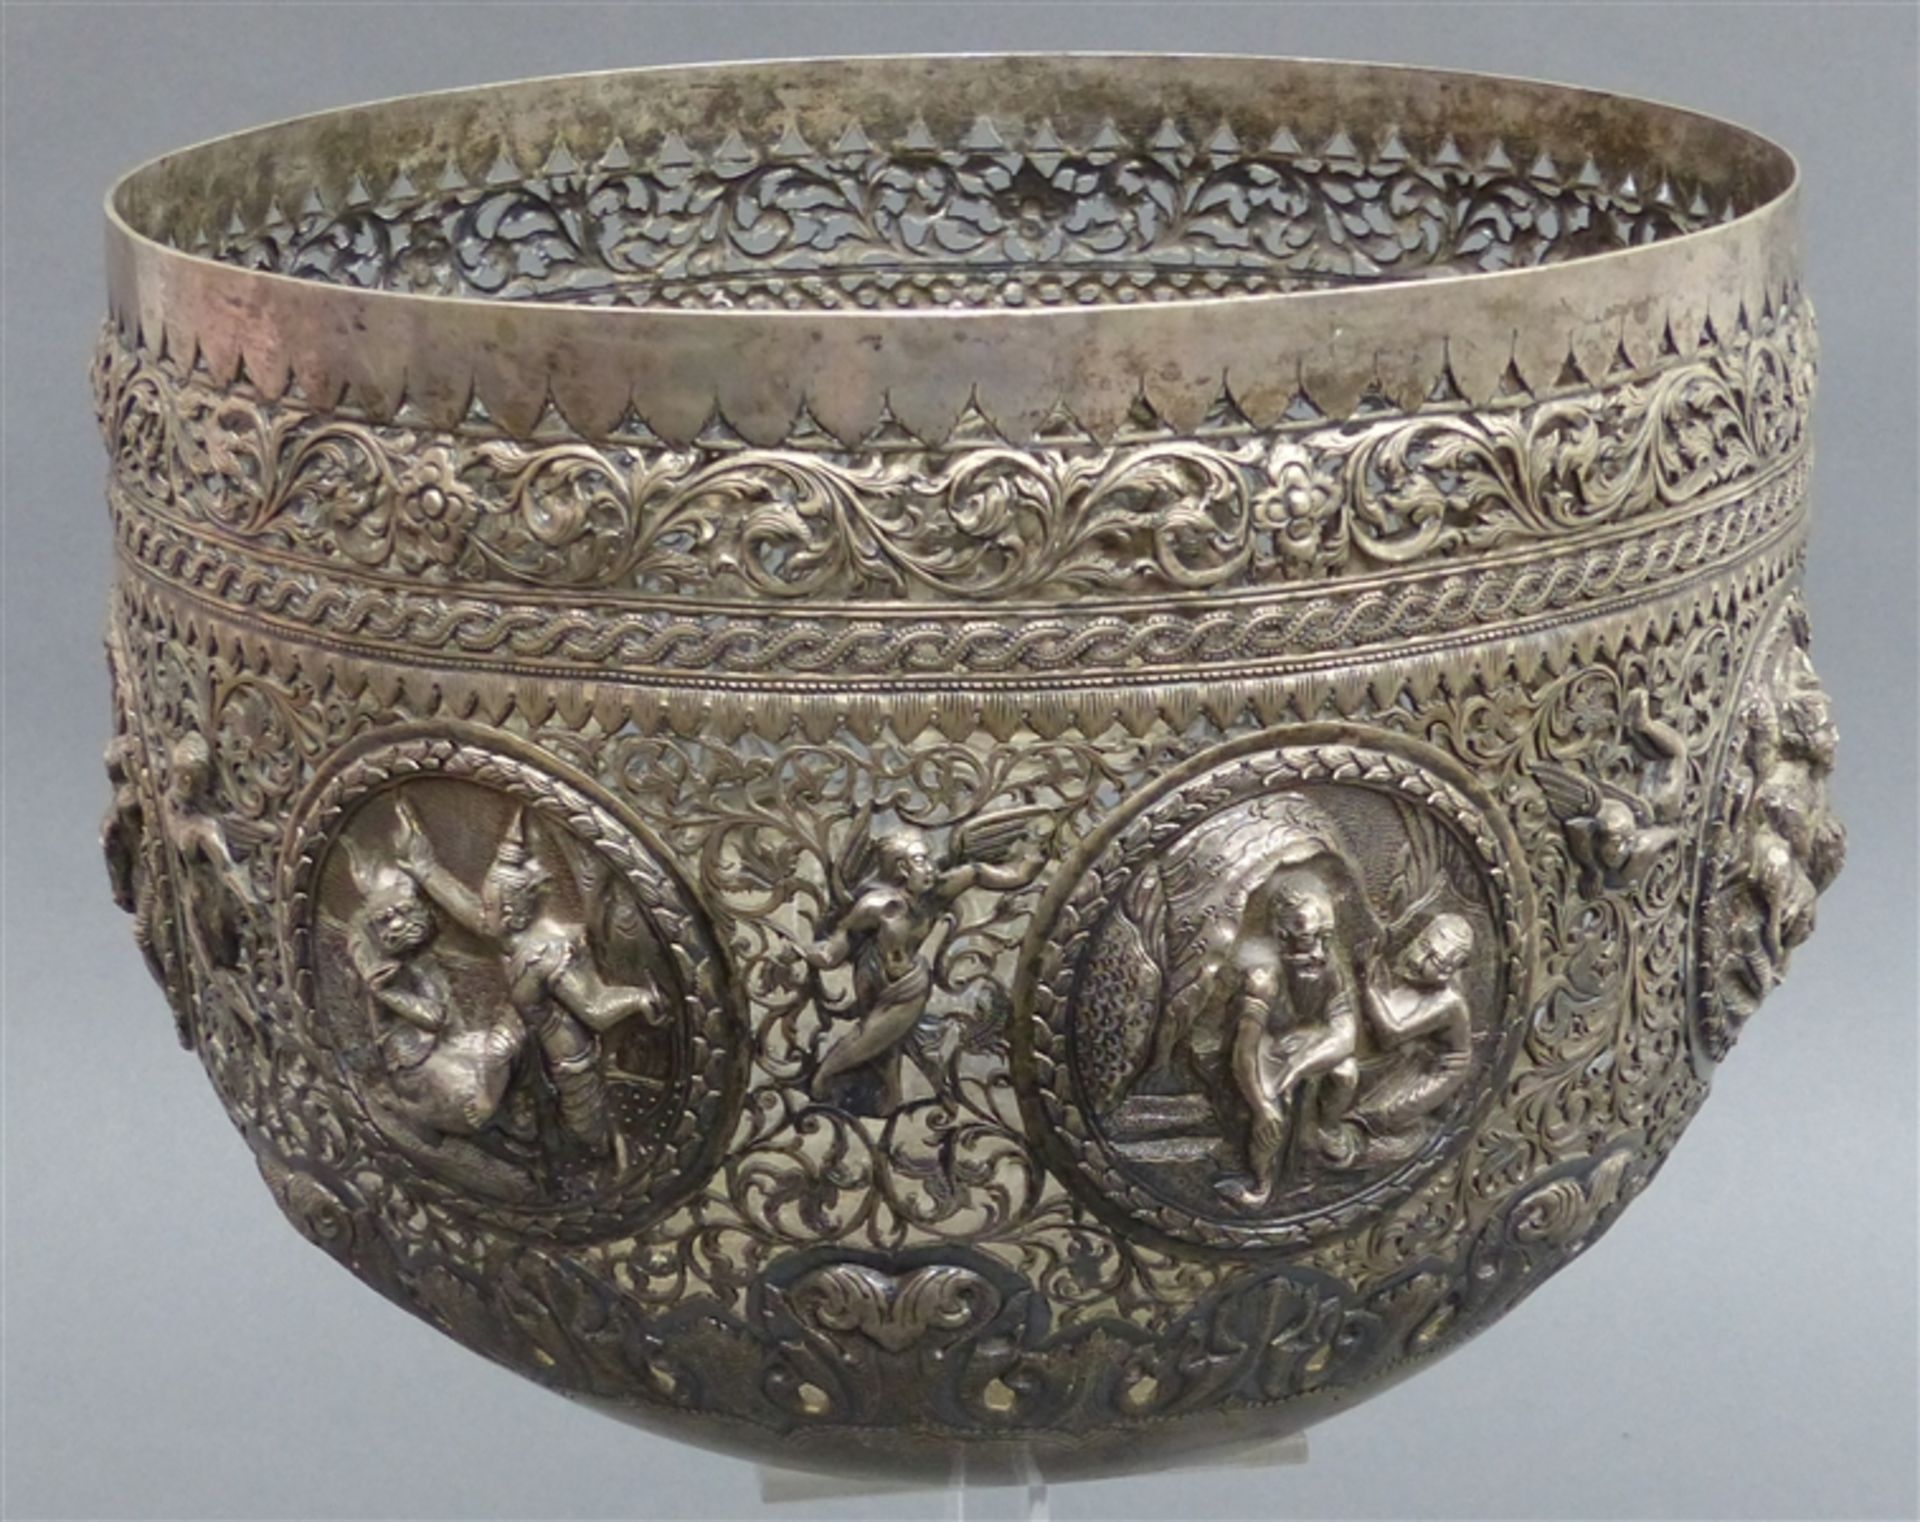 Zierschale Silber, Burma (Myanmar), 7 Medaillons mit Szenen aus dem Buddhismus, Reliefarbeit,